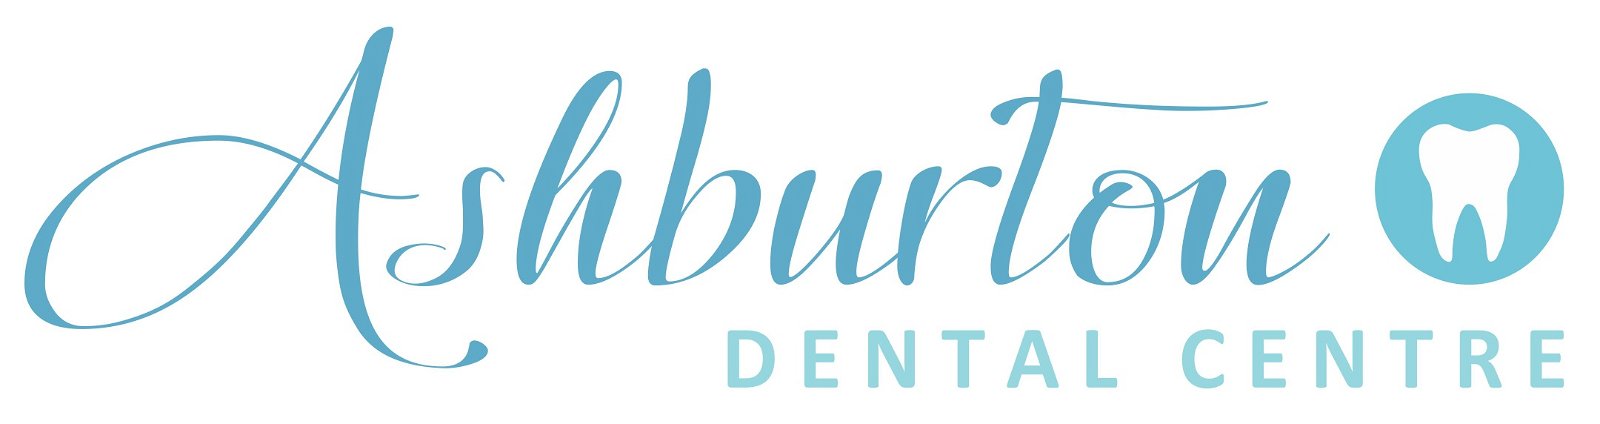 Ashburton Dental Centre - Cairns Dentist 0